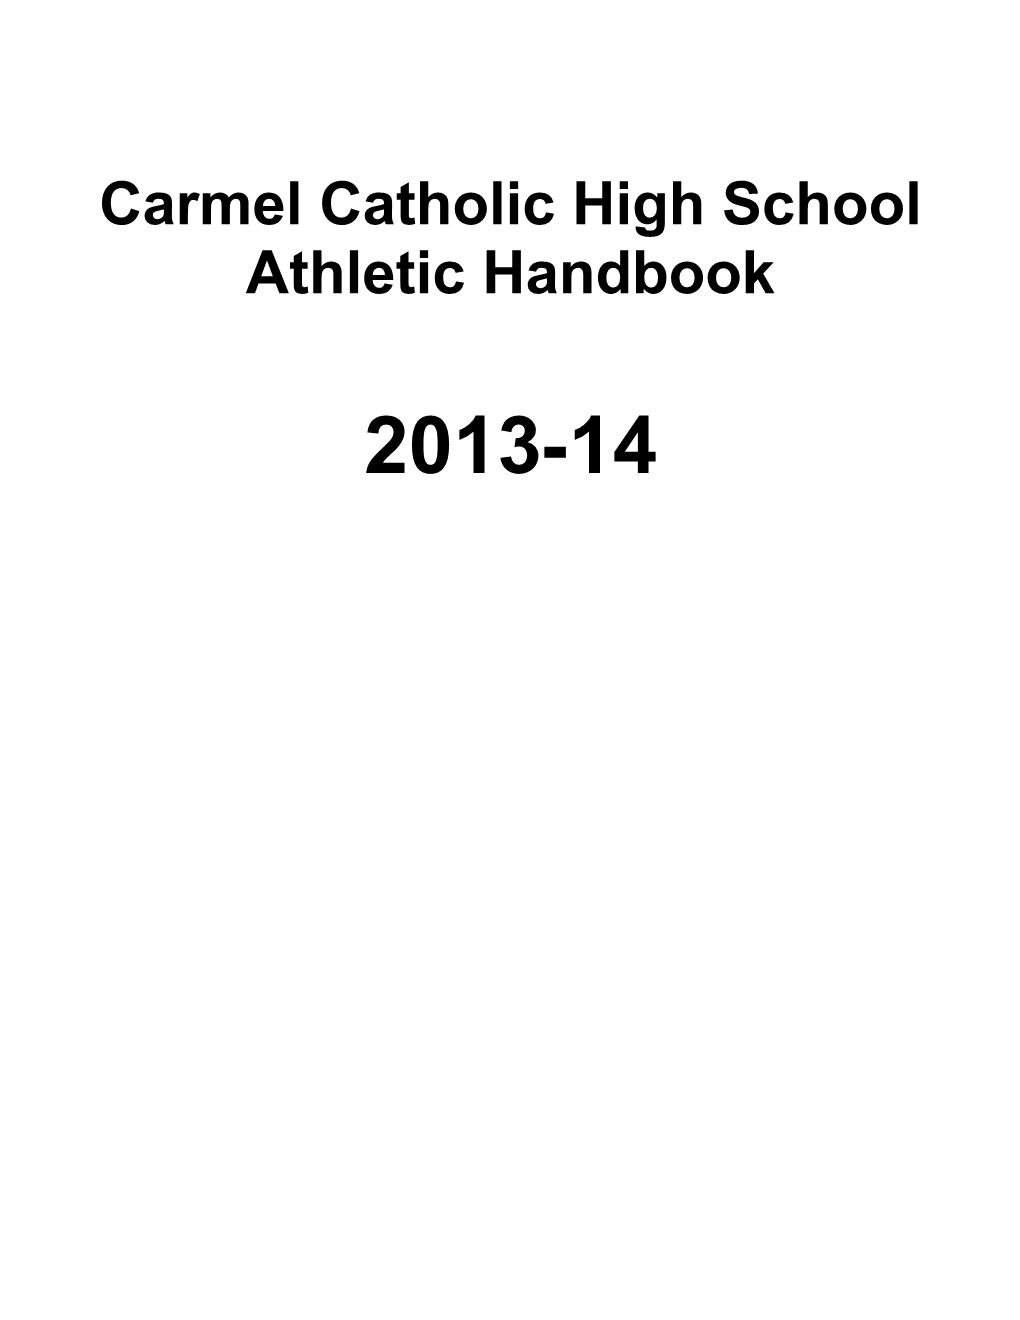 Mission Statement of Carmel High School